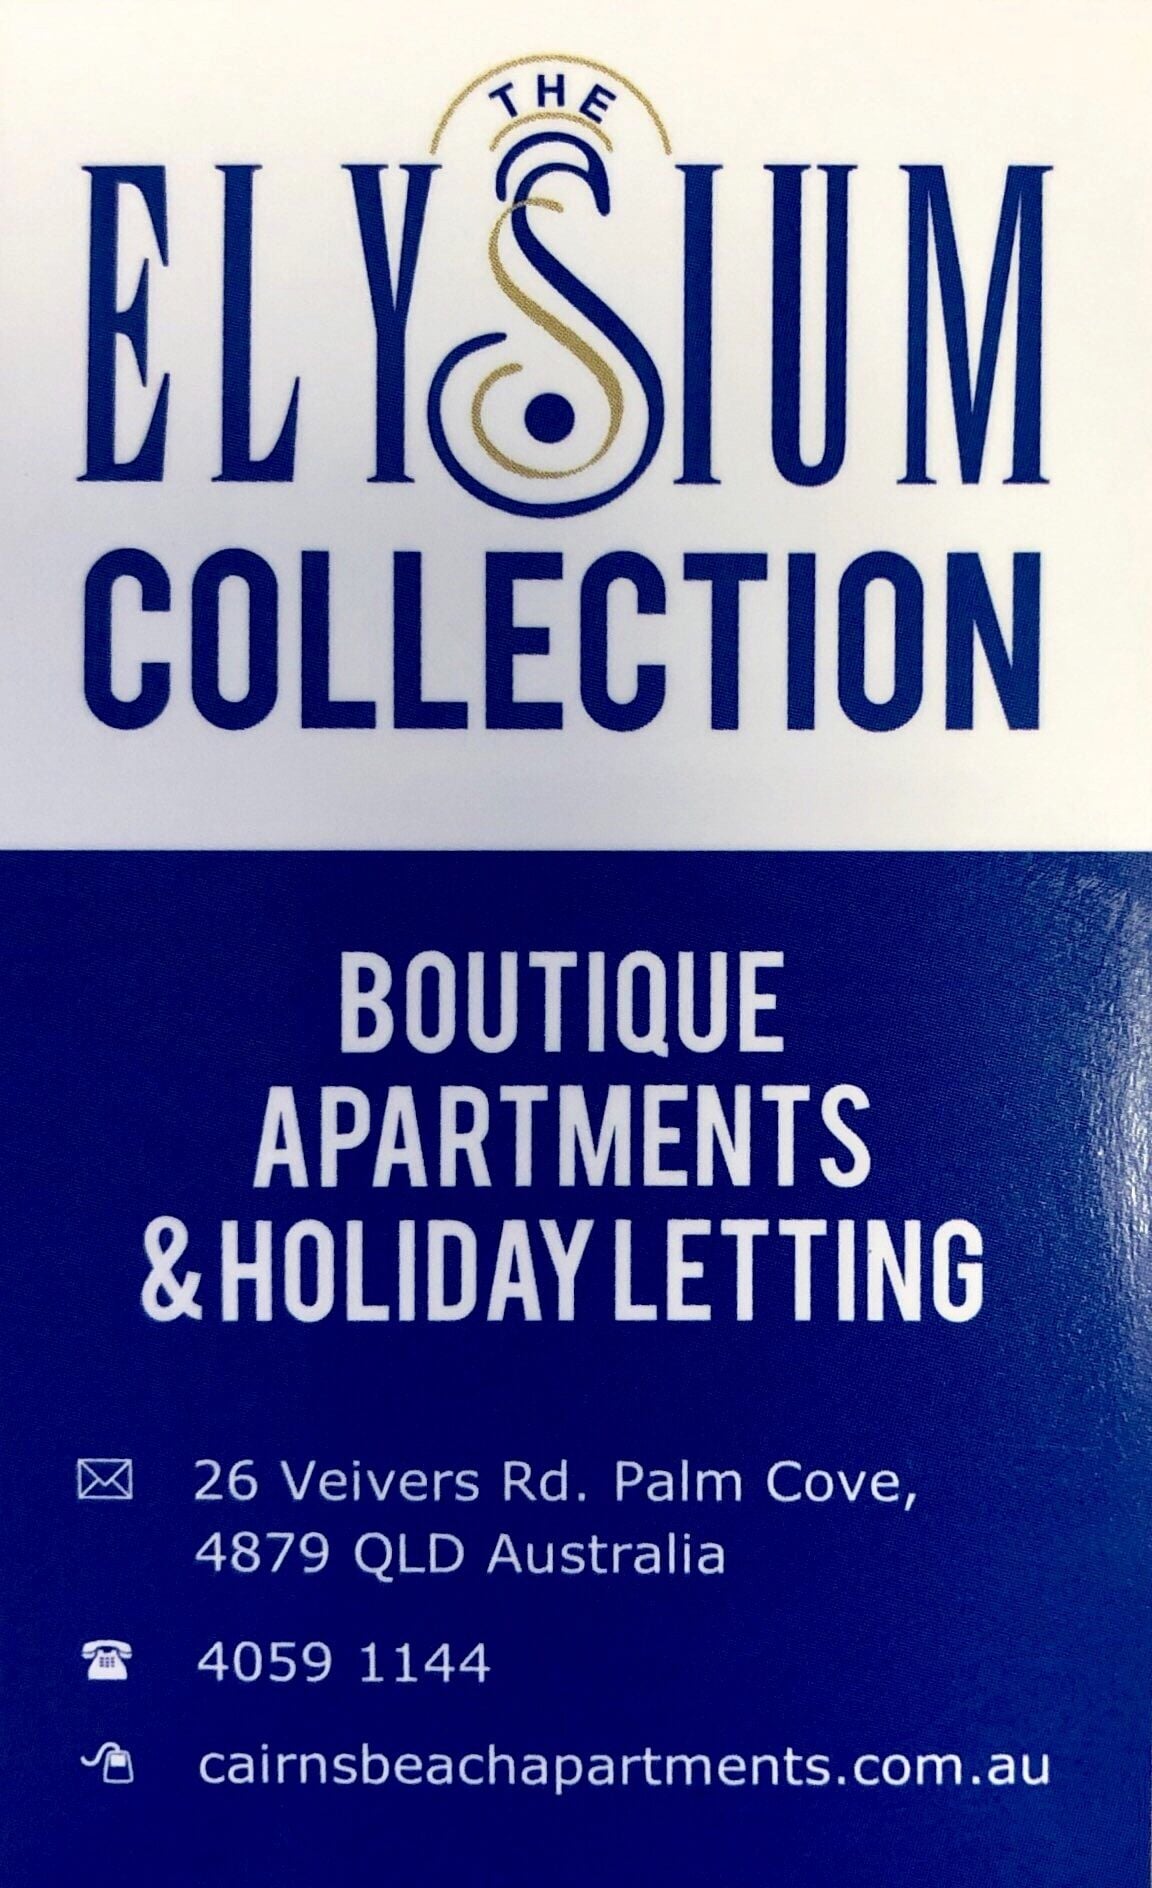 Boutique 3 bedrom 2 bathrm various styles @ Elysium Apartments